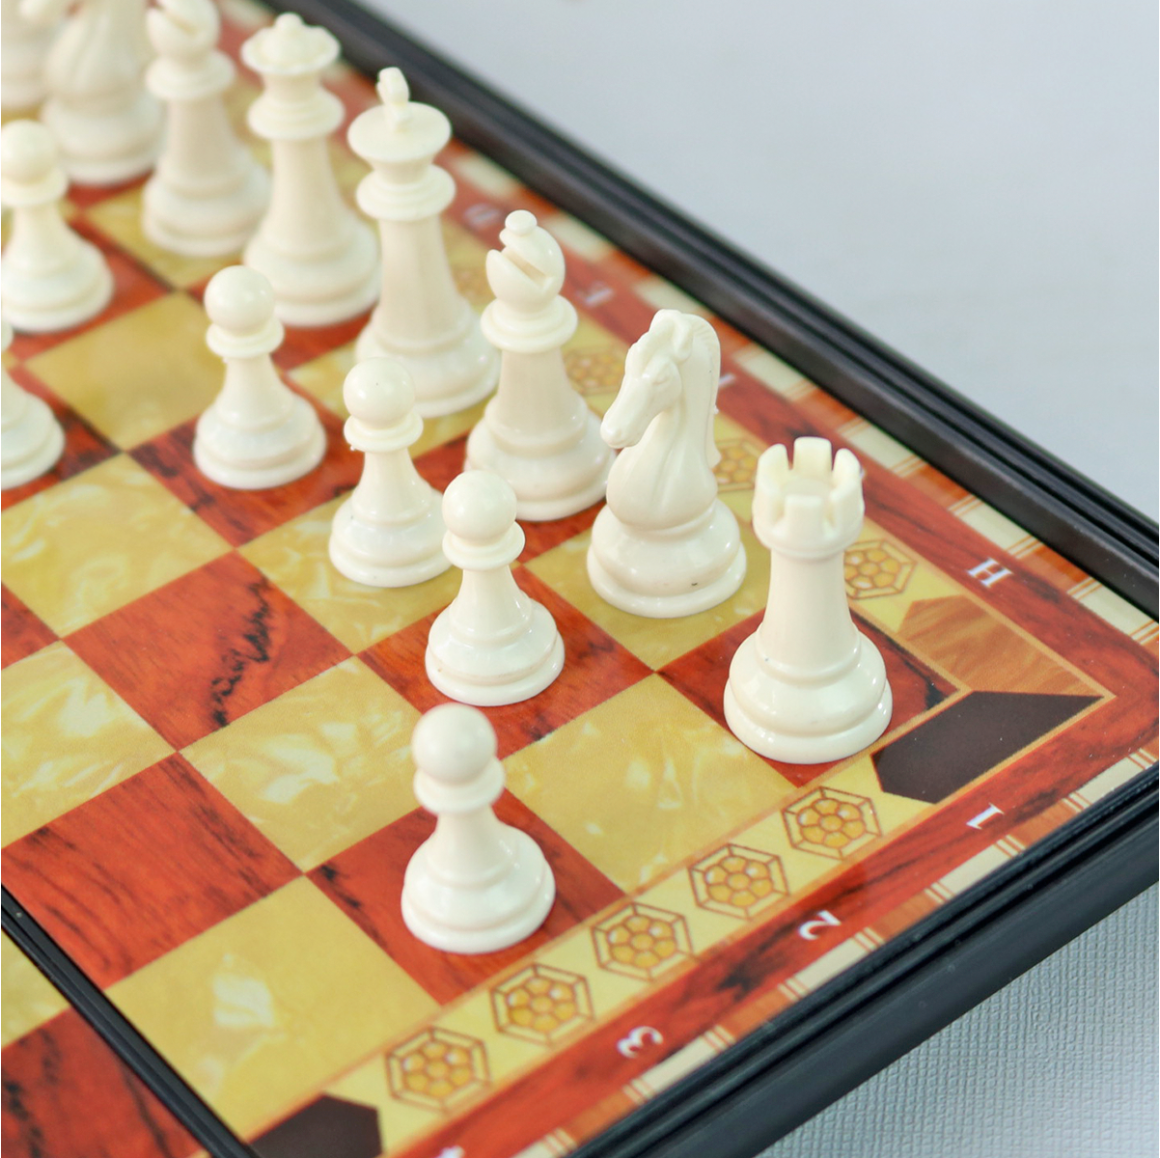 Ia contra o único-jogador xadrez eletrônico jogo de xadrez magnético p –  AOOKMIYA